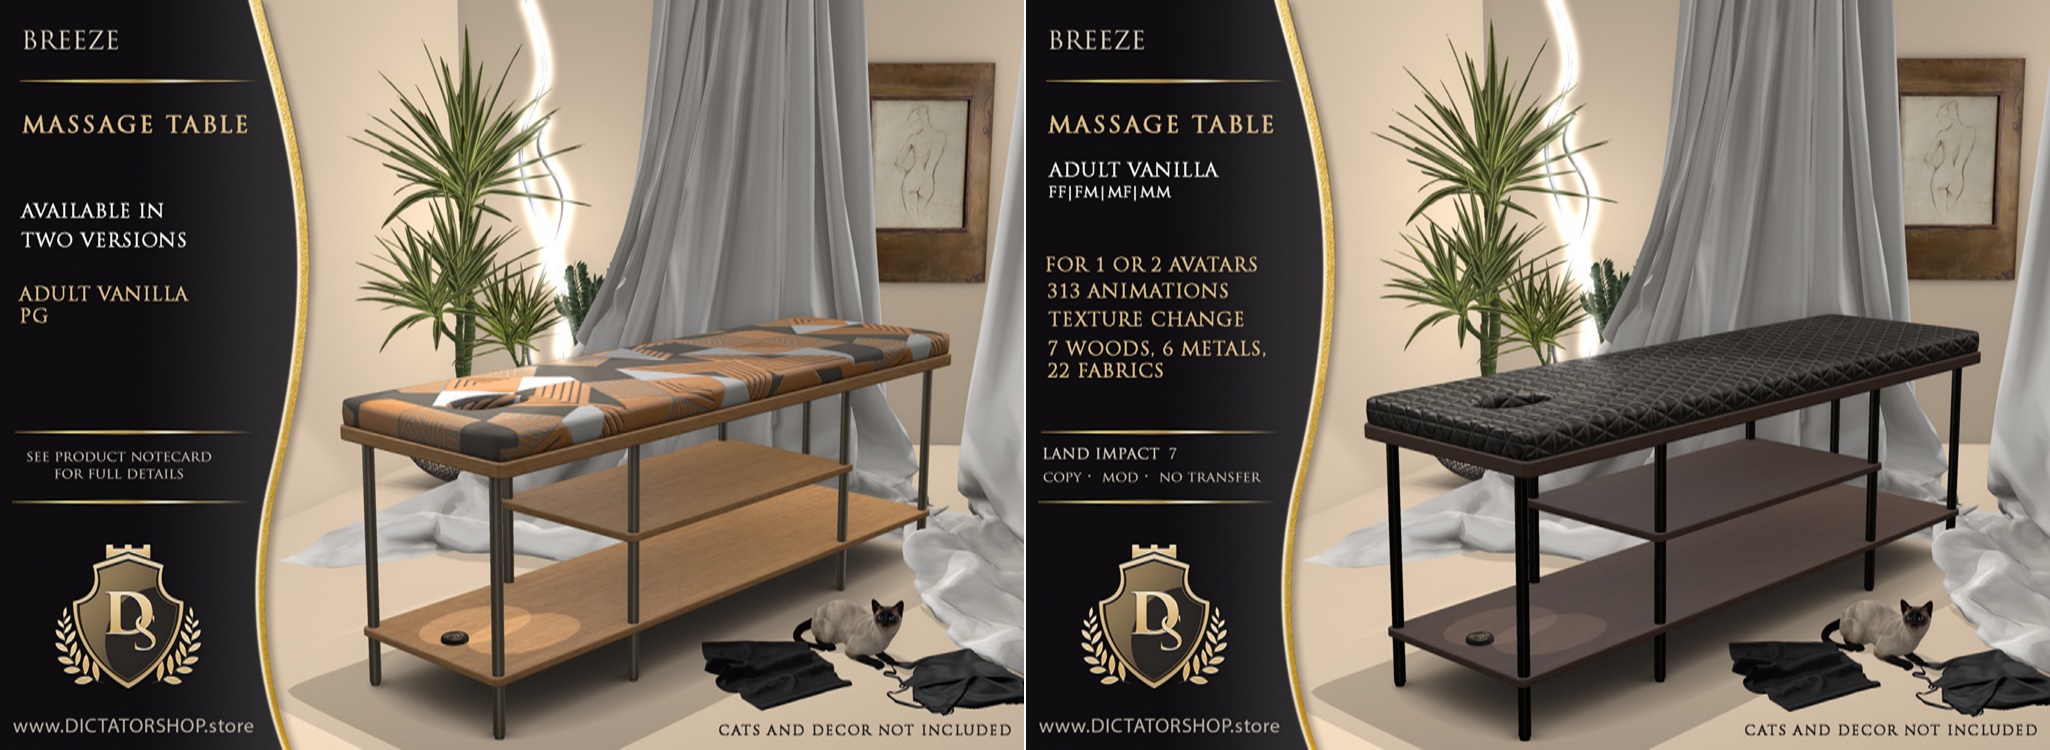 Dictatorshop – Breeze Massage Table